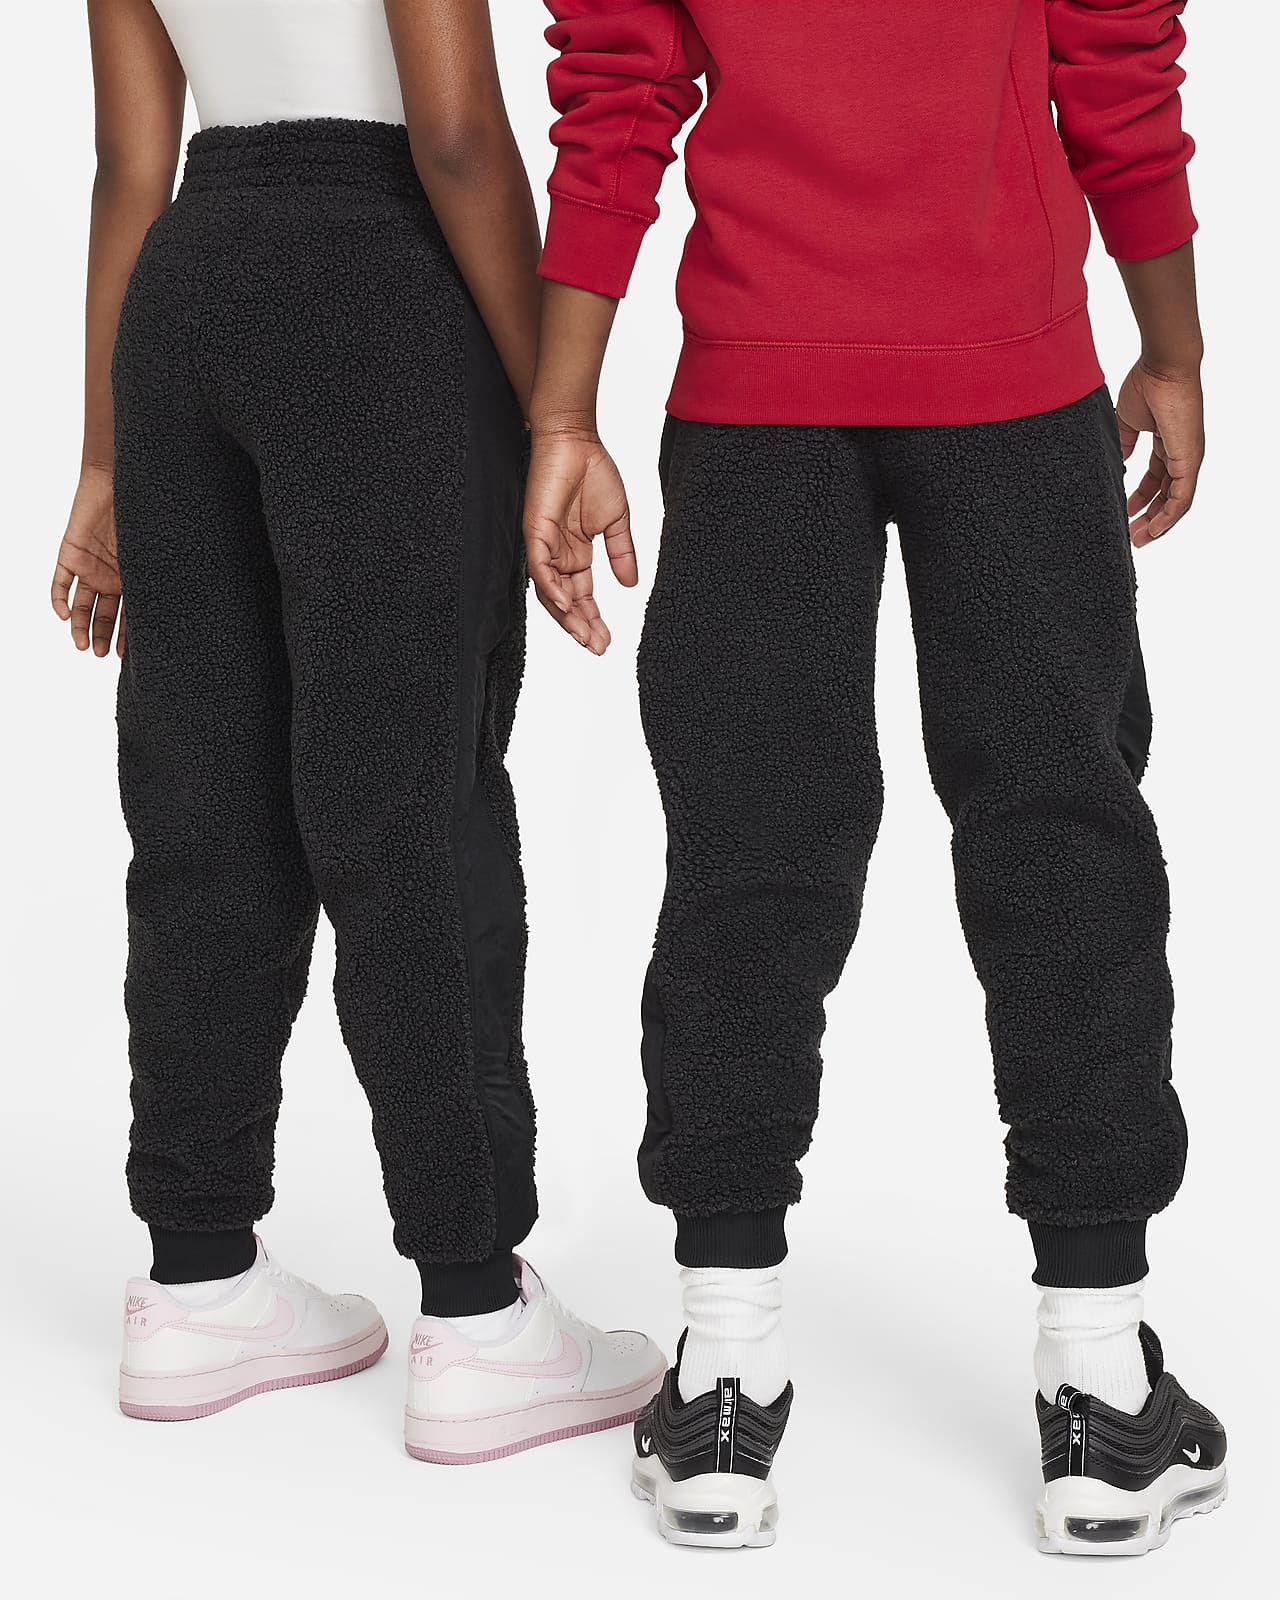 Nike jogger pants unisex high quality